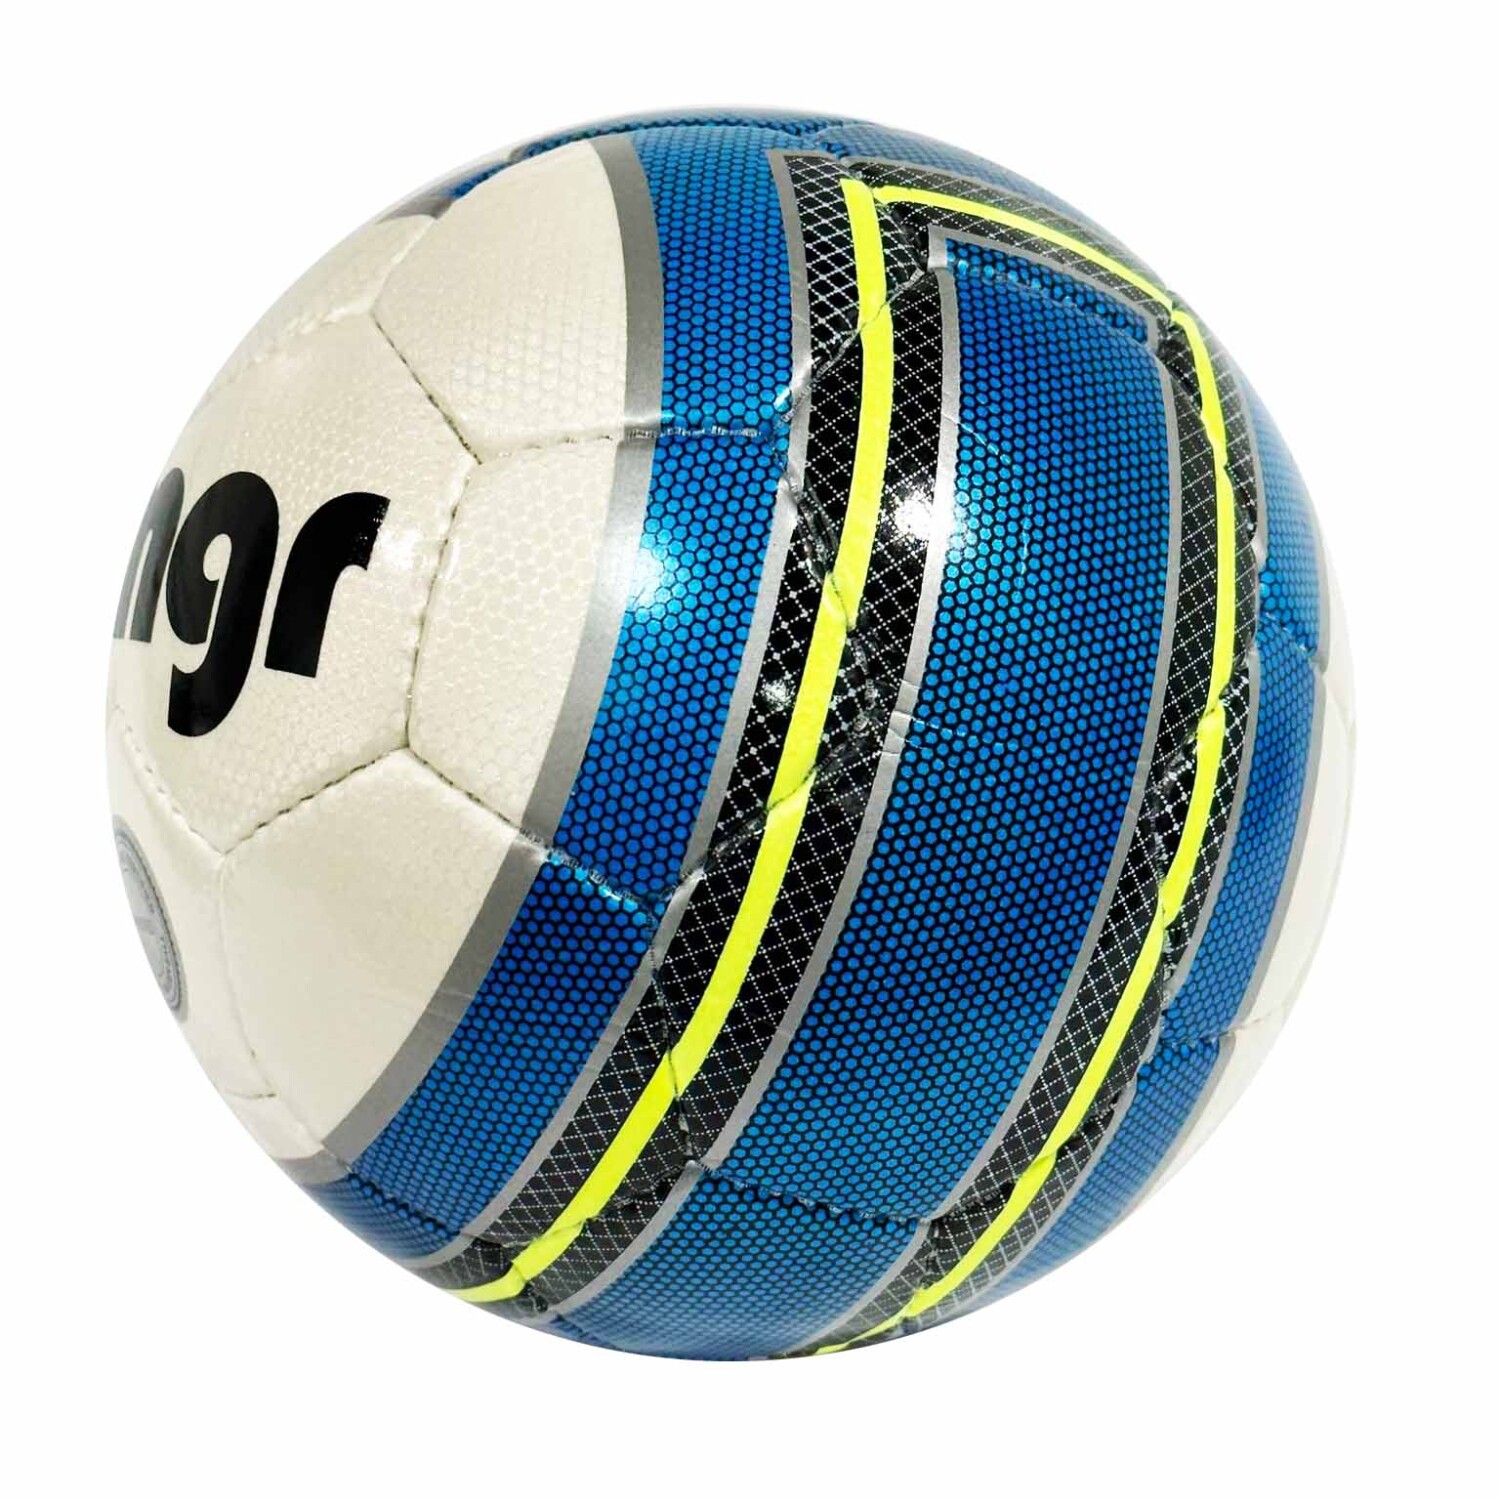 PELOTA DE FUTBOL NÚMERO 4 / PELOTA DE FULBITO - Merkur Artículos  Deportivos, balon de futbol.